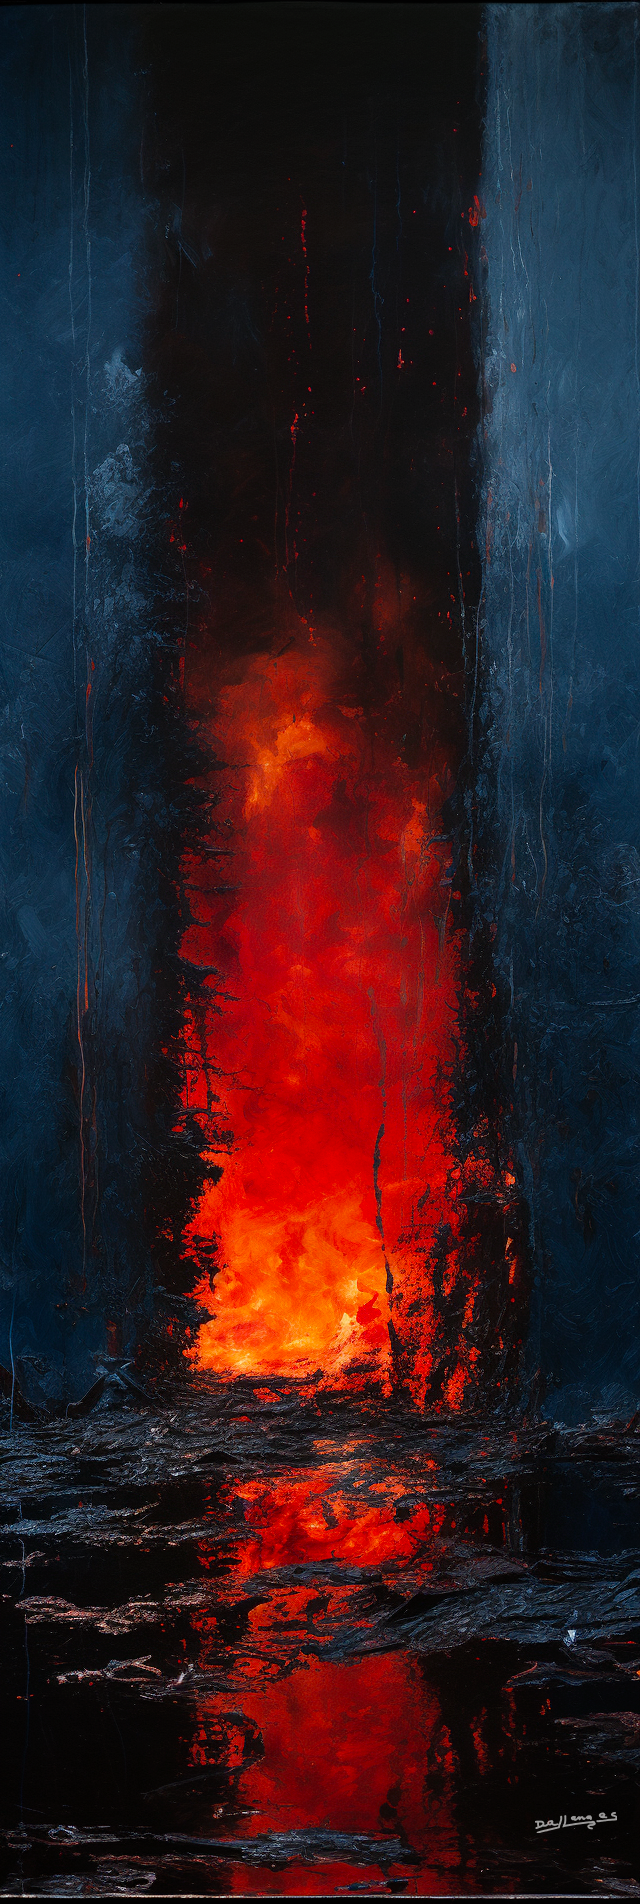 Fireside Flames 06 - Dallanges Contemporary Art